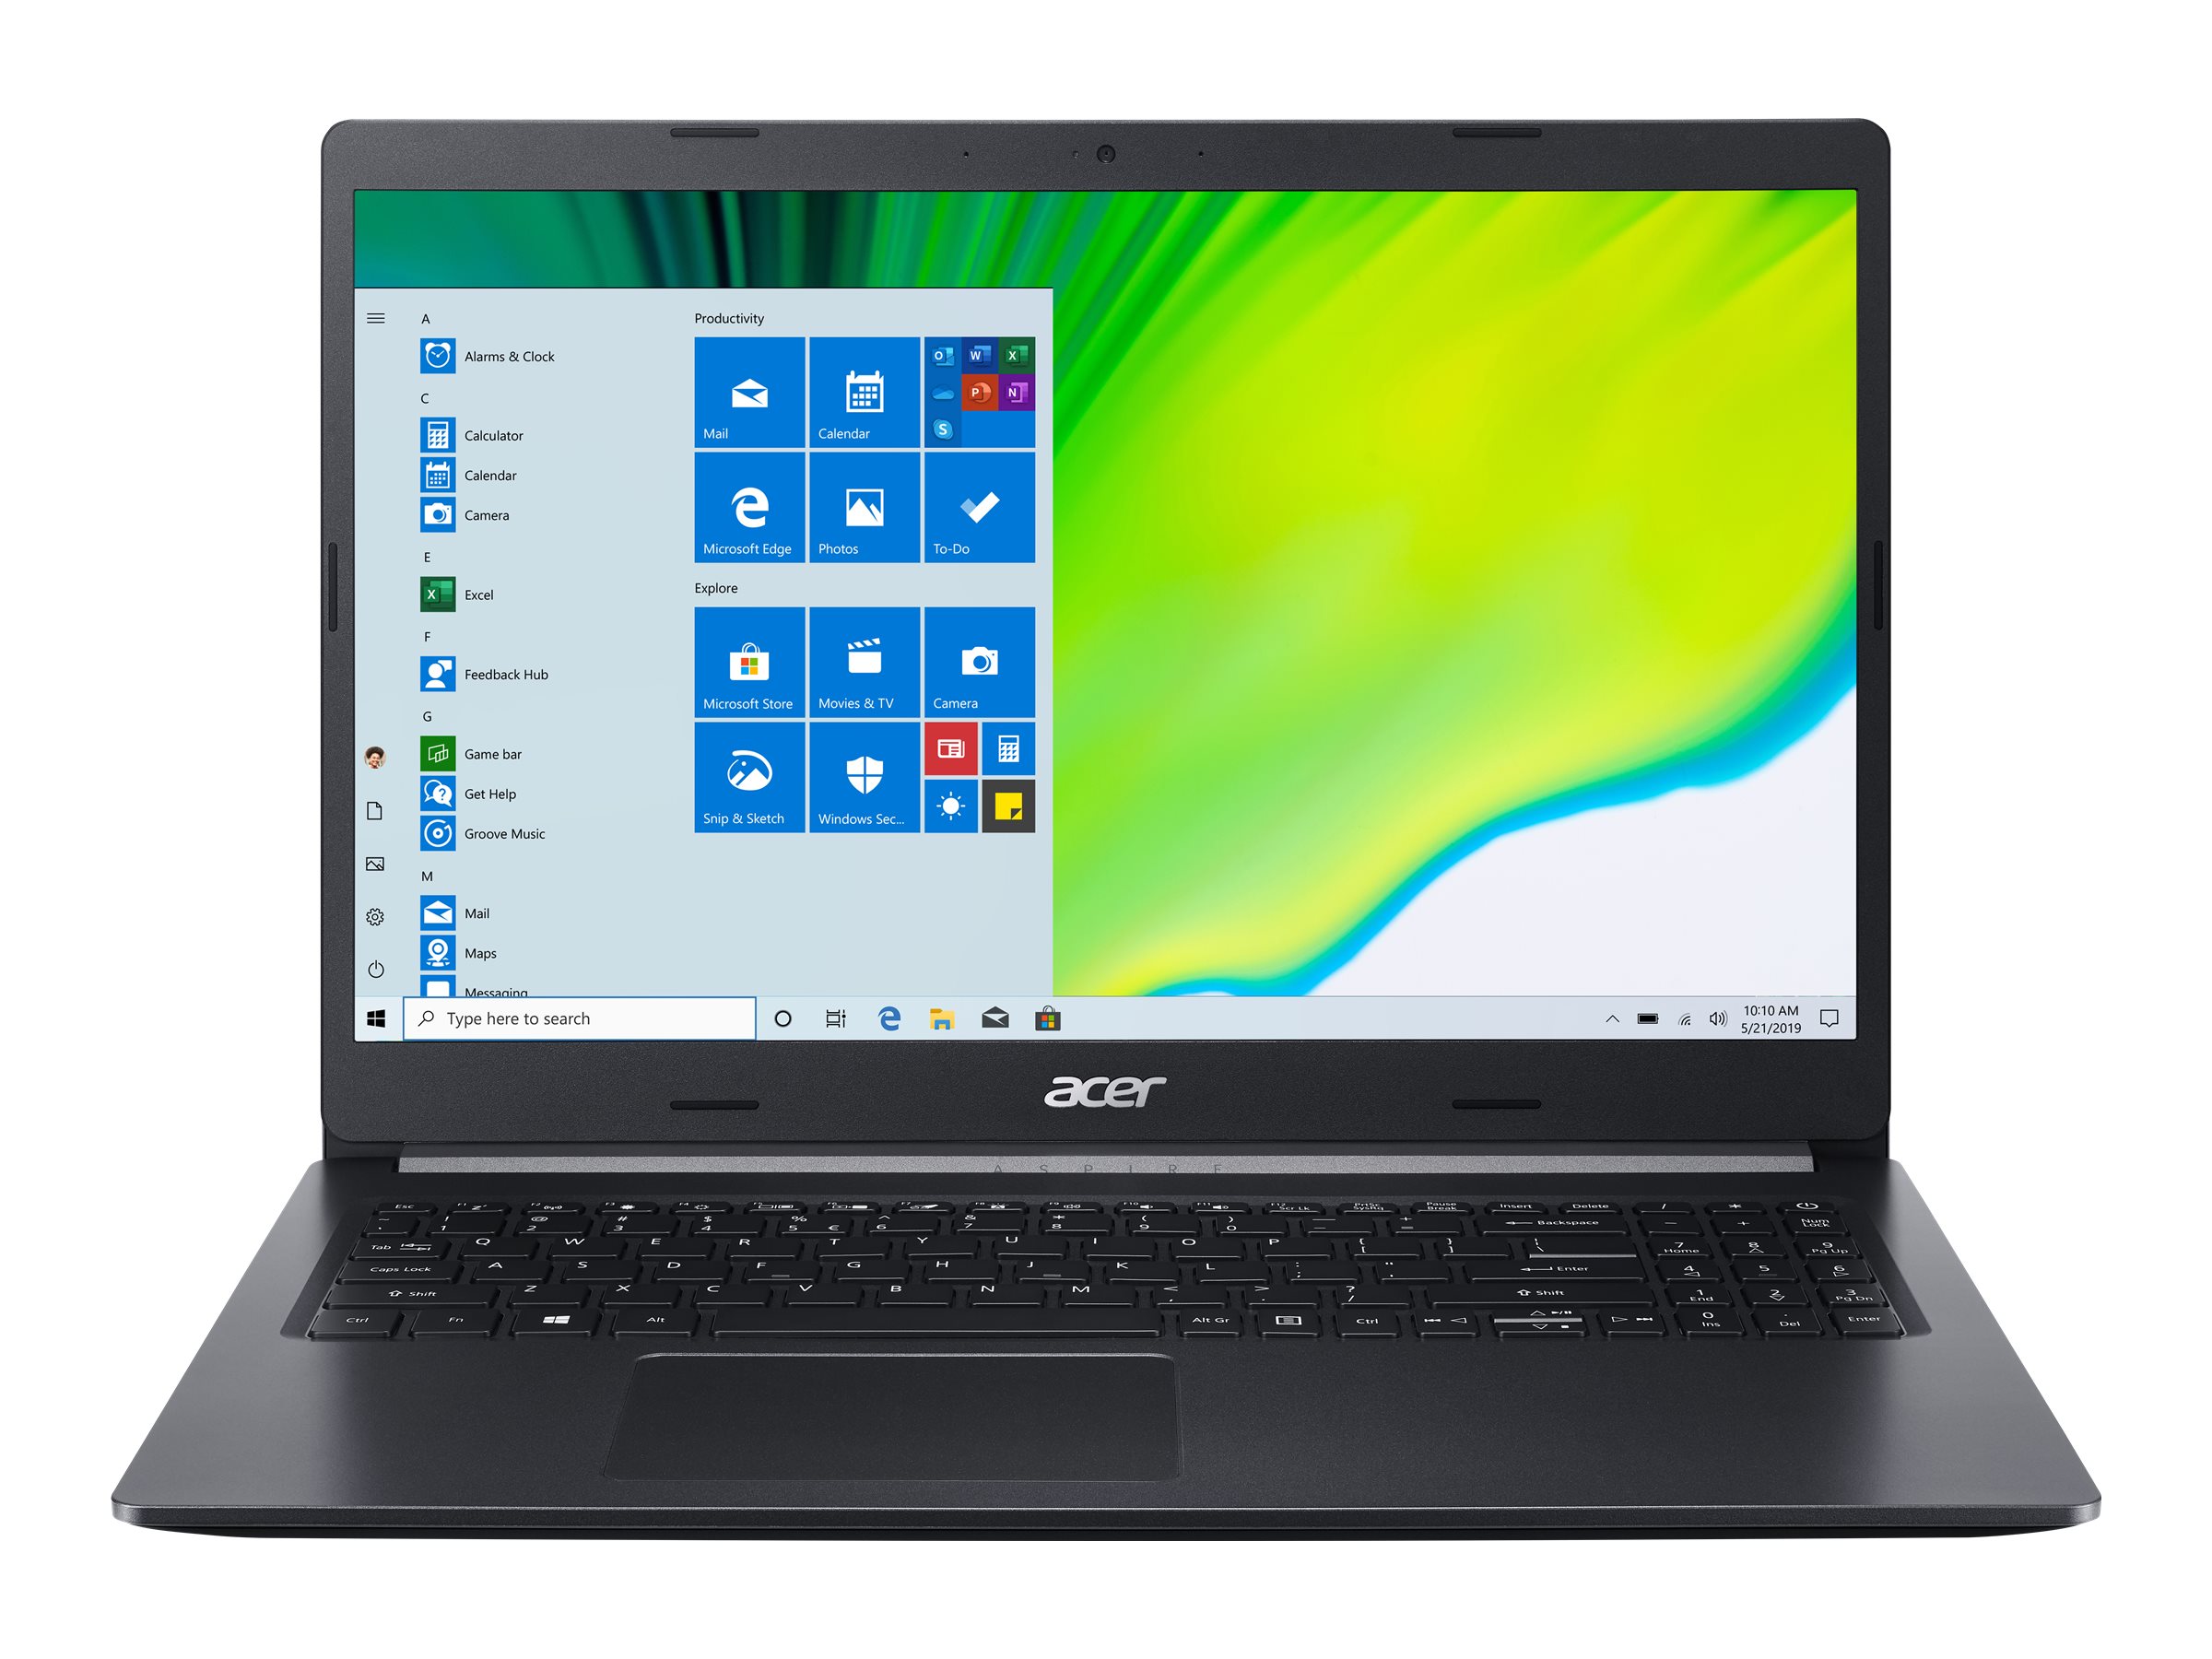 Acer Aspire 5 A515-44-R4M5 - AMD Ryzen 5 4500U / 2.3 GHz - Win 10 Home 64-bit - Radeon HD - 8 GB RAM - 512 GB SSD - 15.6" 1366 x 768 (HD) - Wi-Fi 5 - charcoal black - kbd: US Intl - image 3 of 10